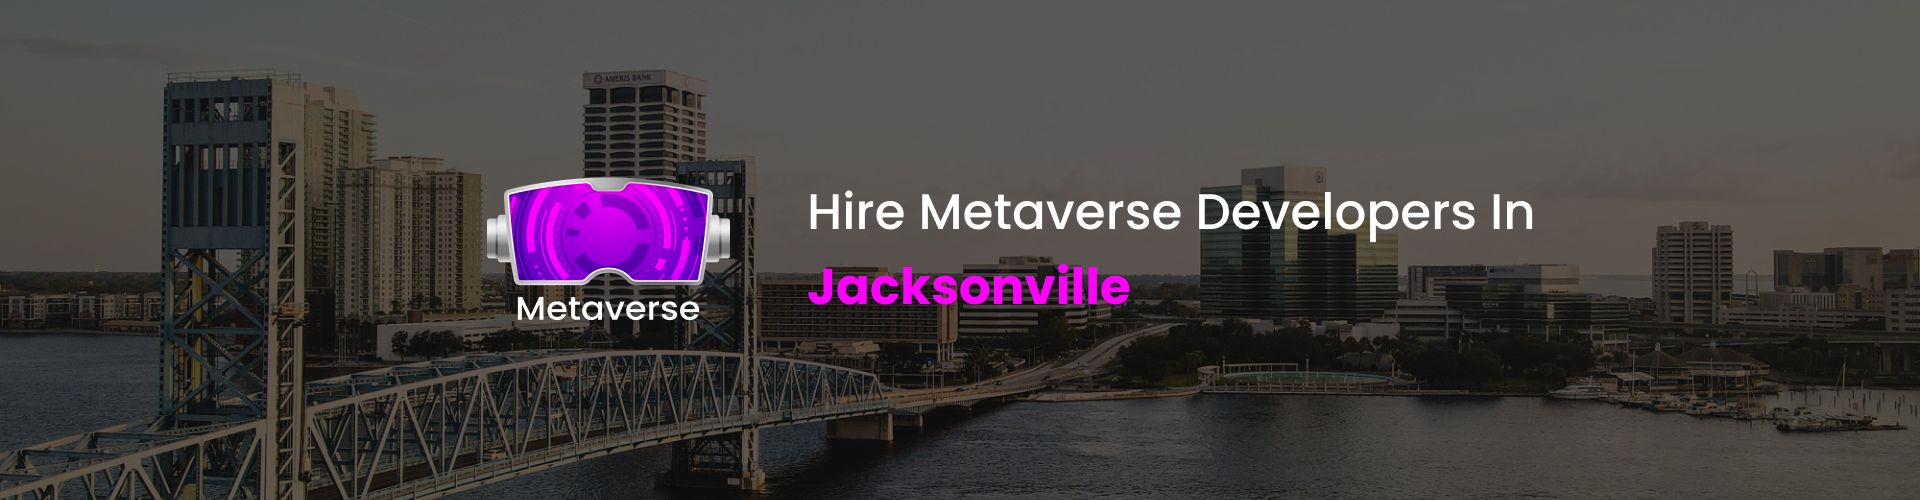 metaverse developers in jacksonville